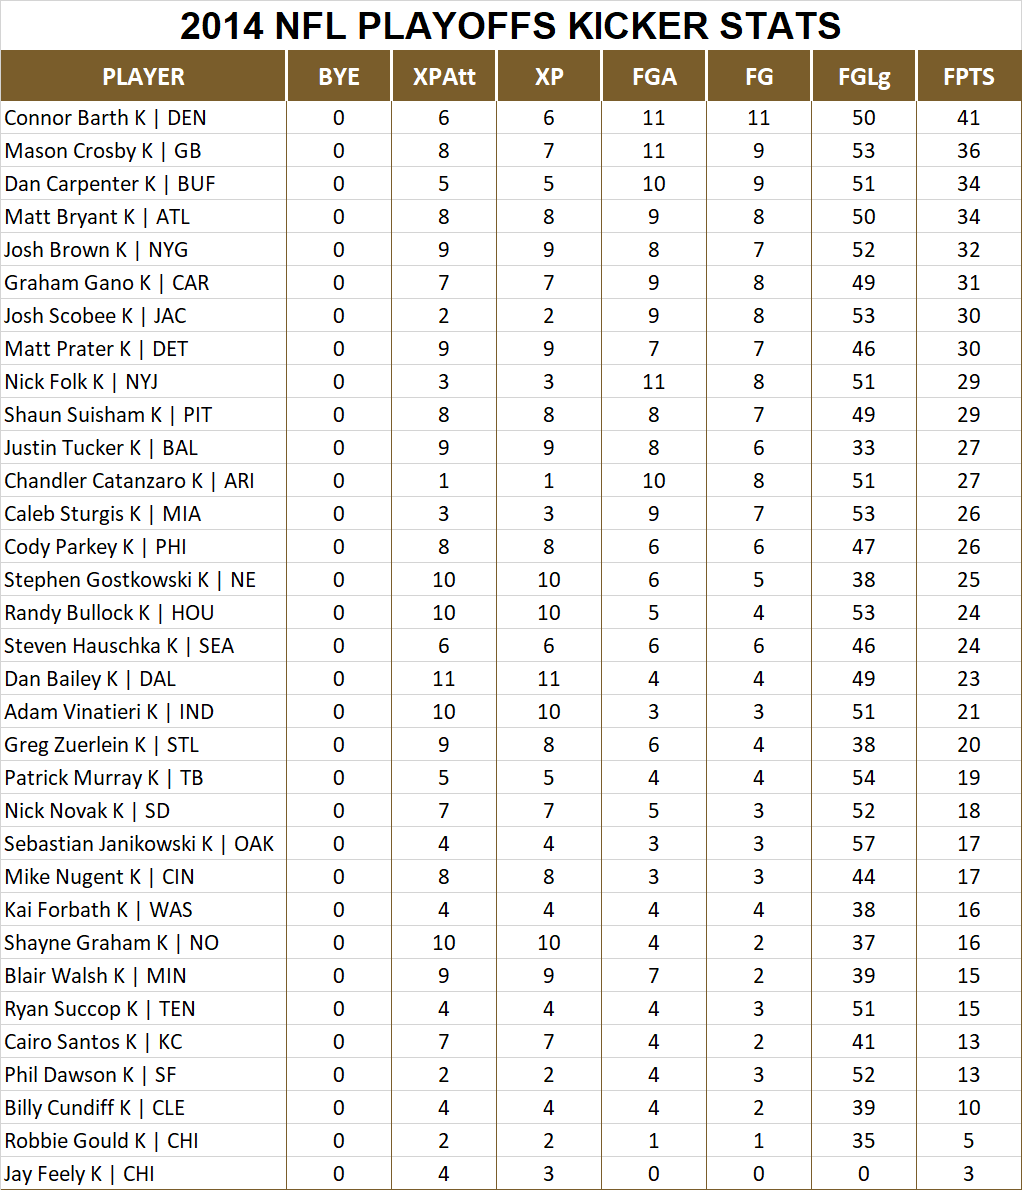 2014 National Football League Pool Playoff Player Kicker Stats